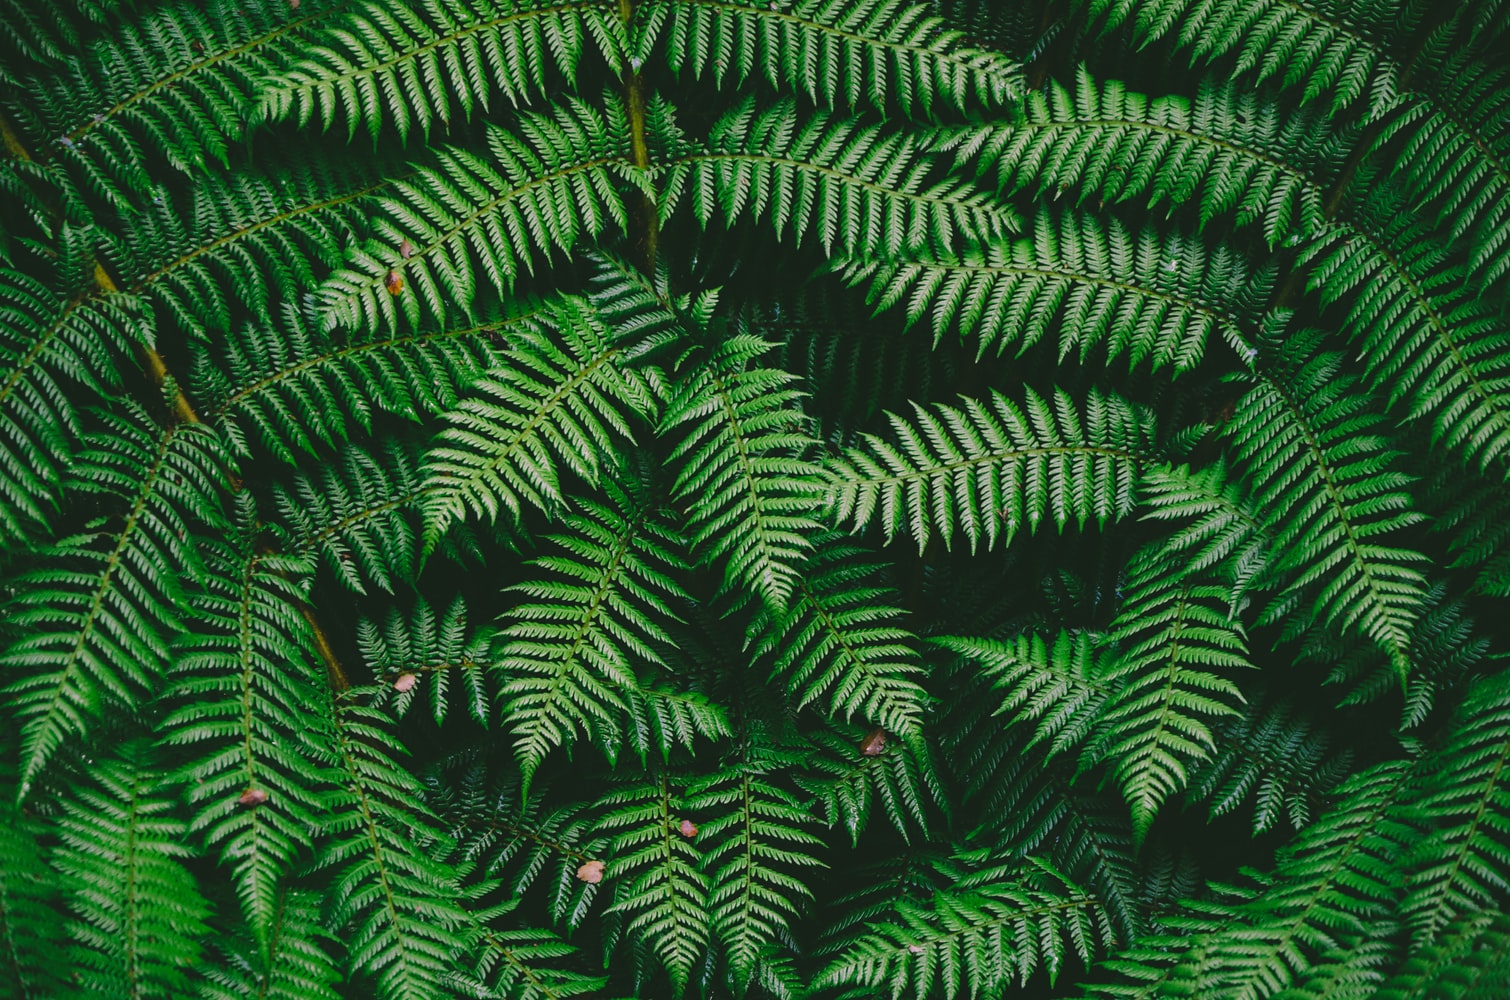 Green fern forest